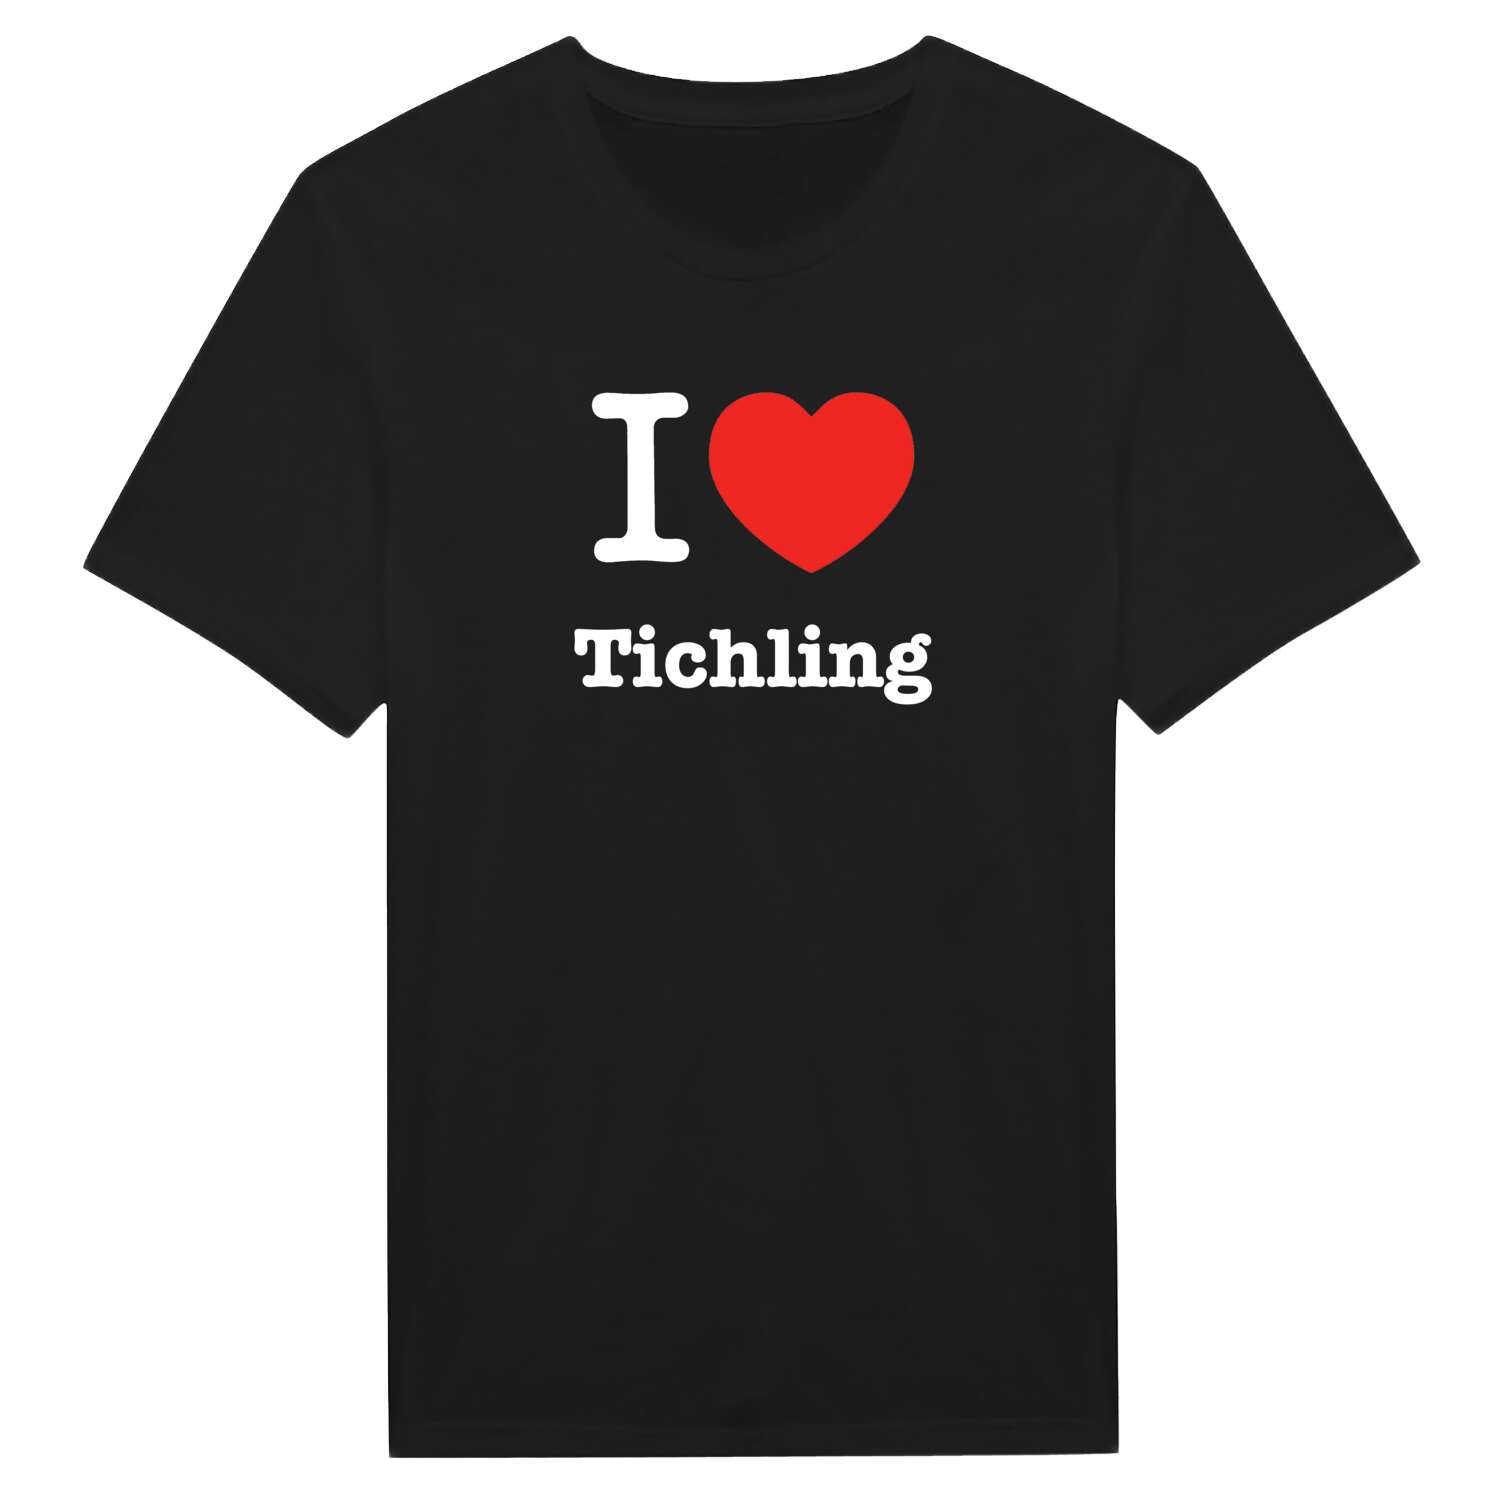 Tichling T-Shirt »I love«